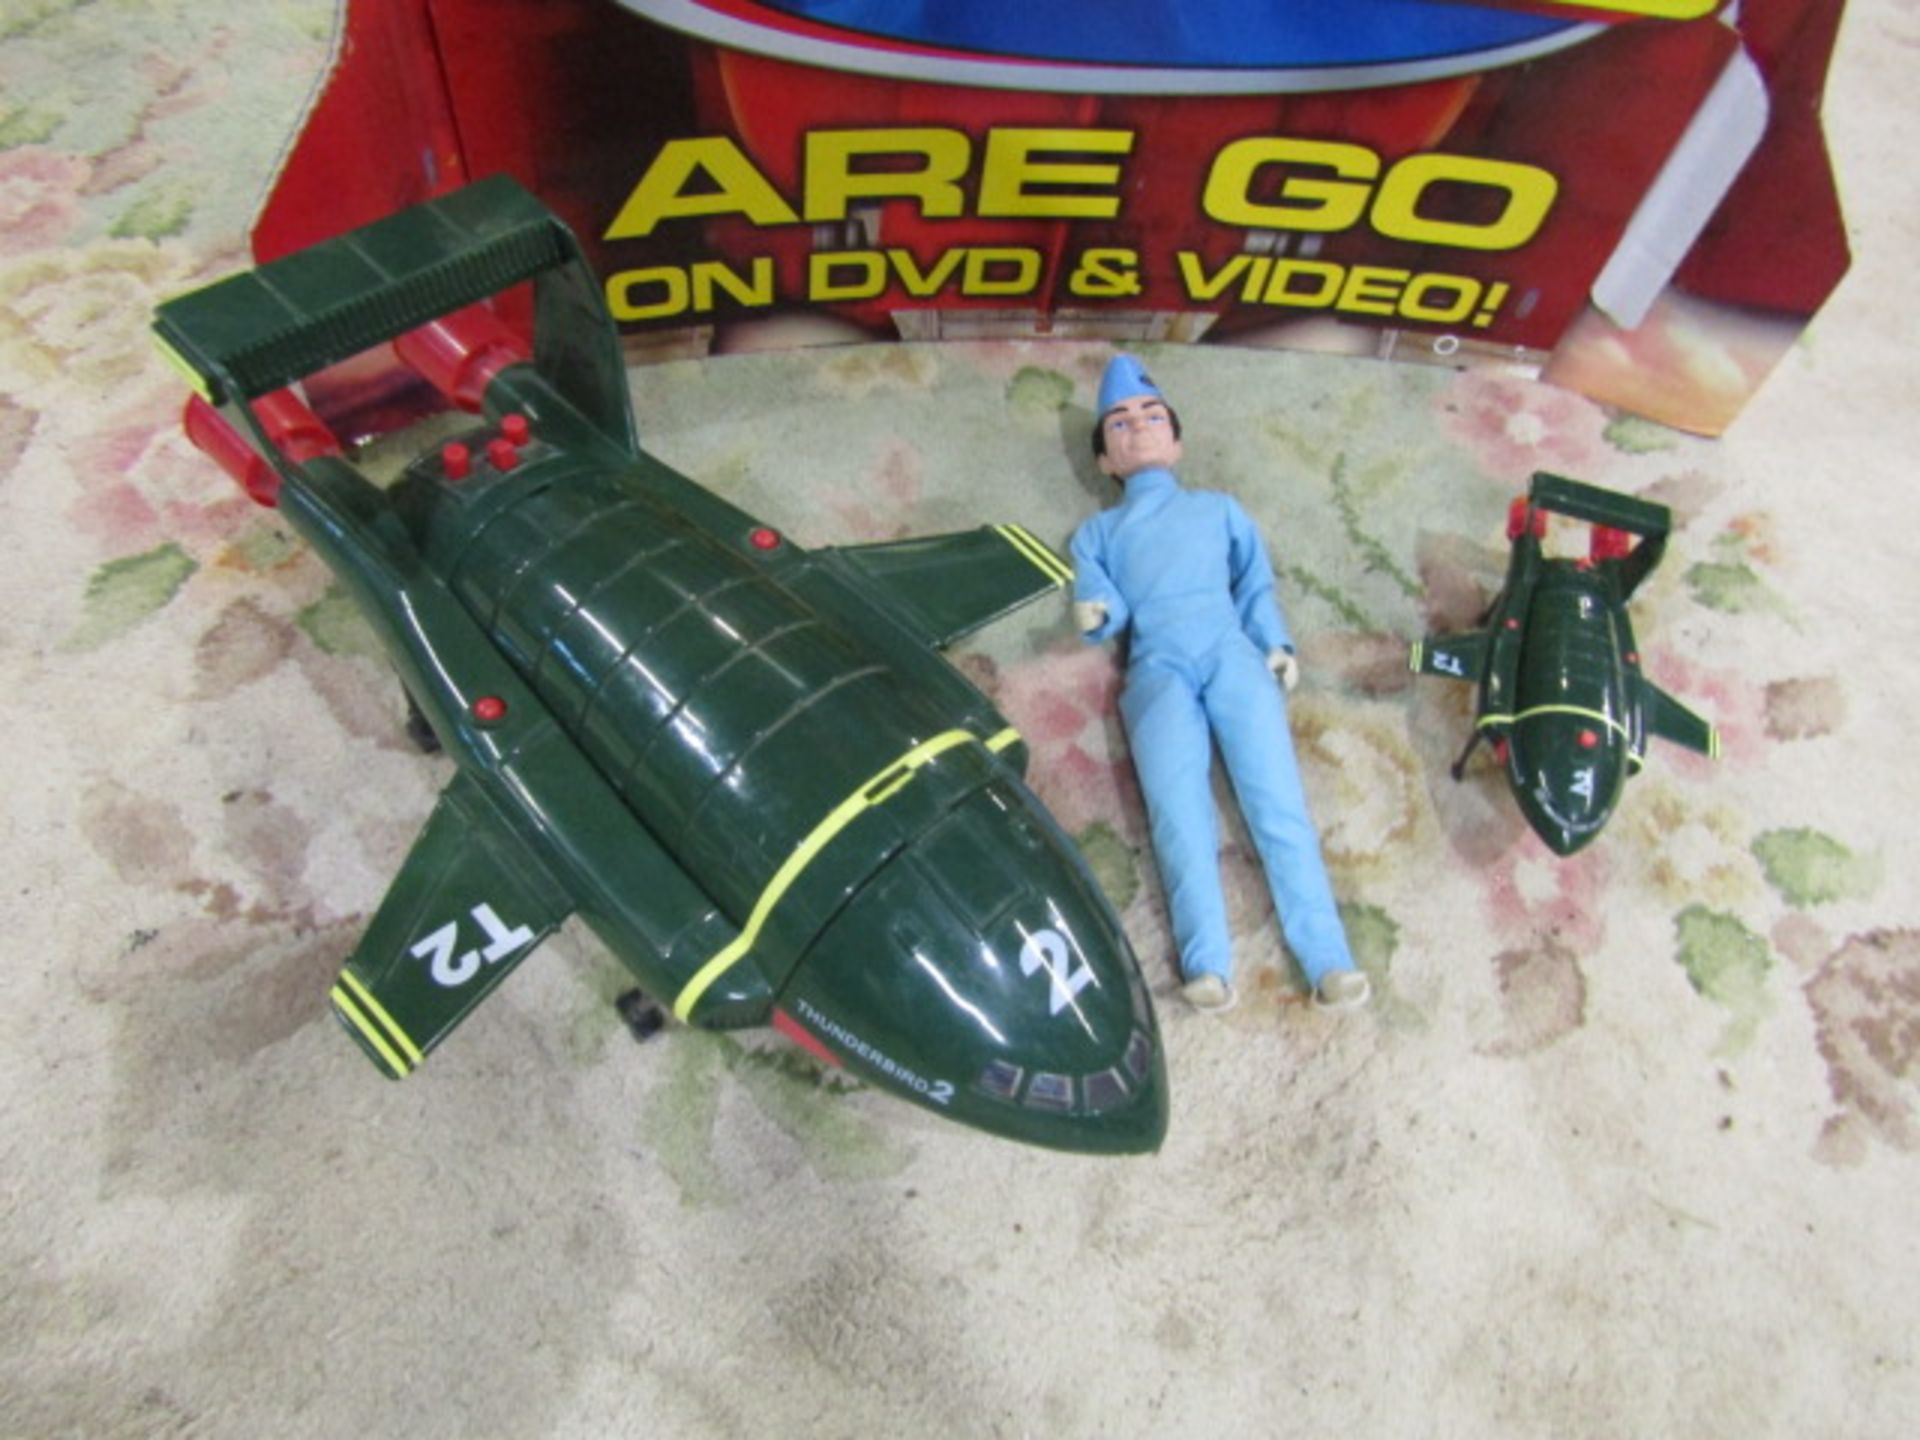 Thunderbirds cardboard shop display rocket and toys - Image 3 of 3